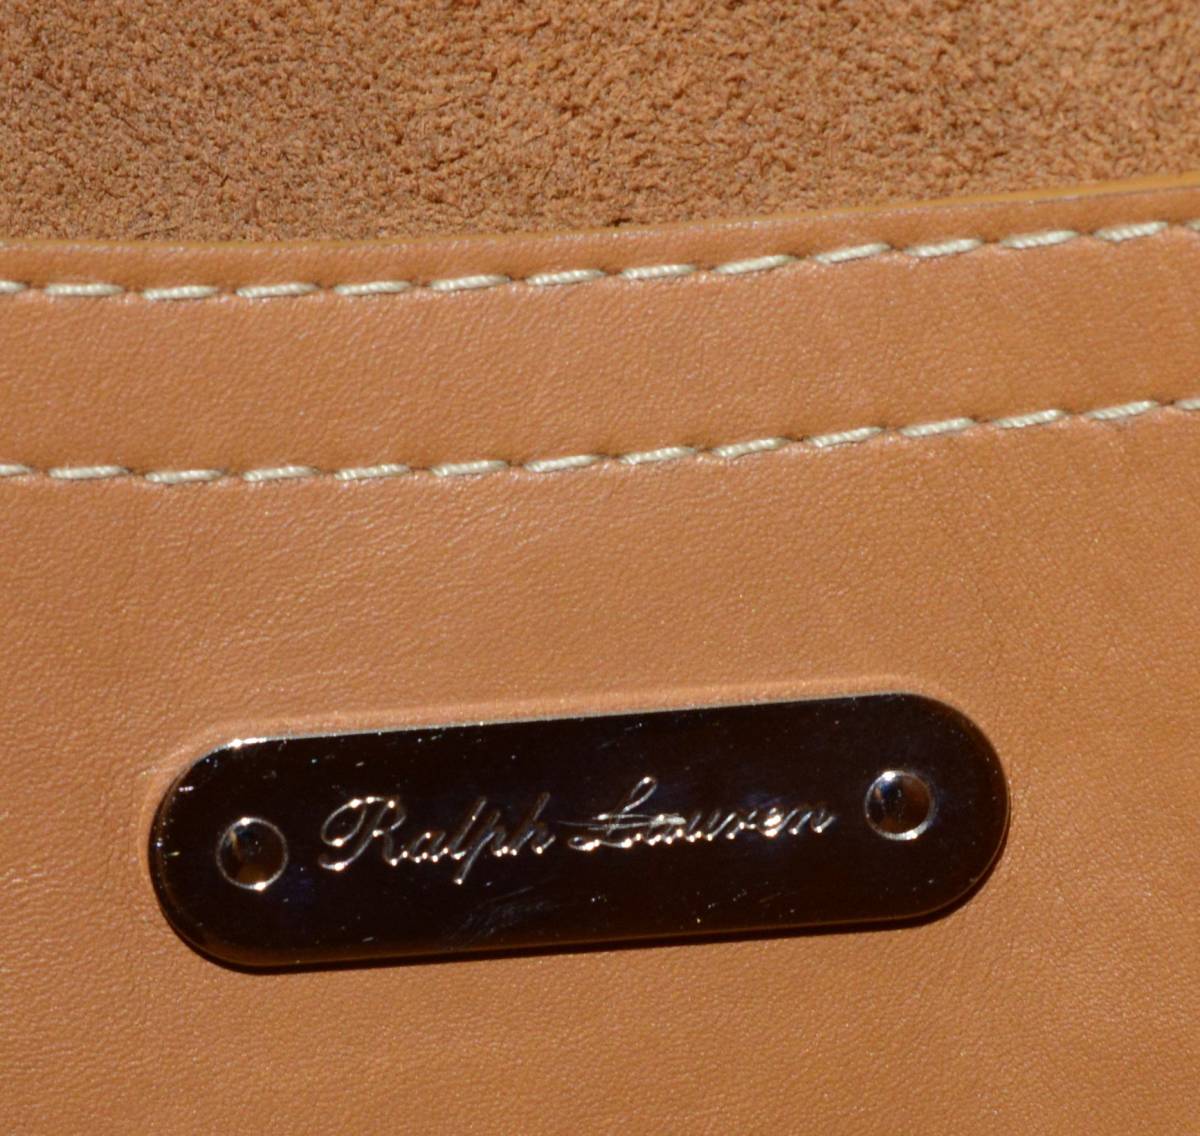 POLO Polo Ralph Lauren original leather tote bag handbag real leather made BAG Brown feeling of luxury Spain made 